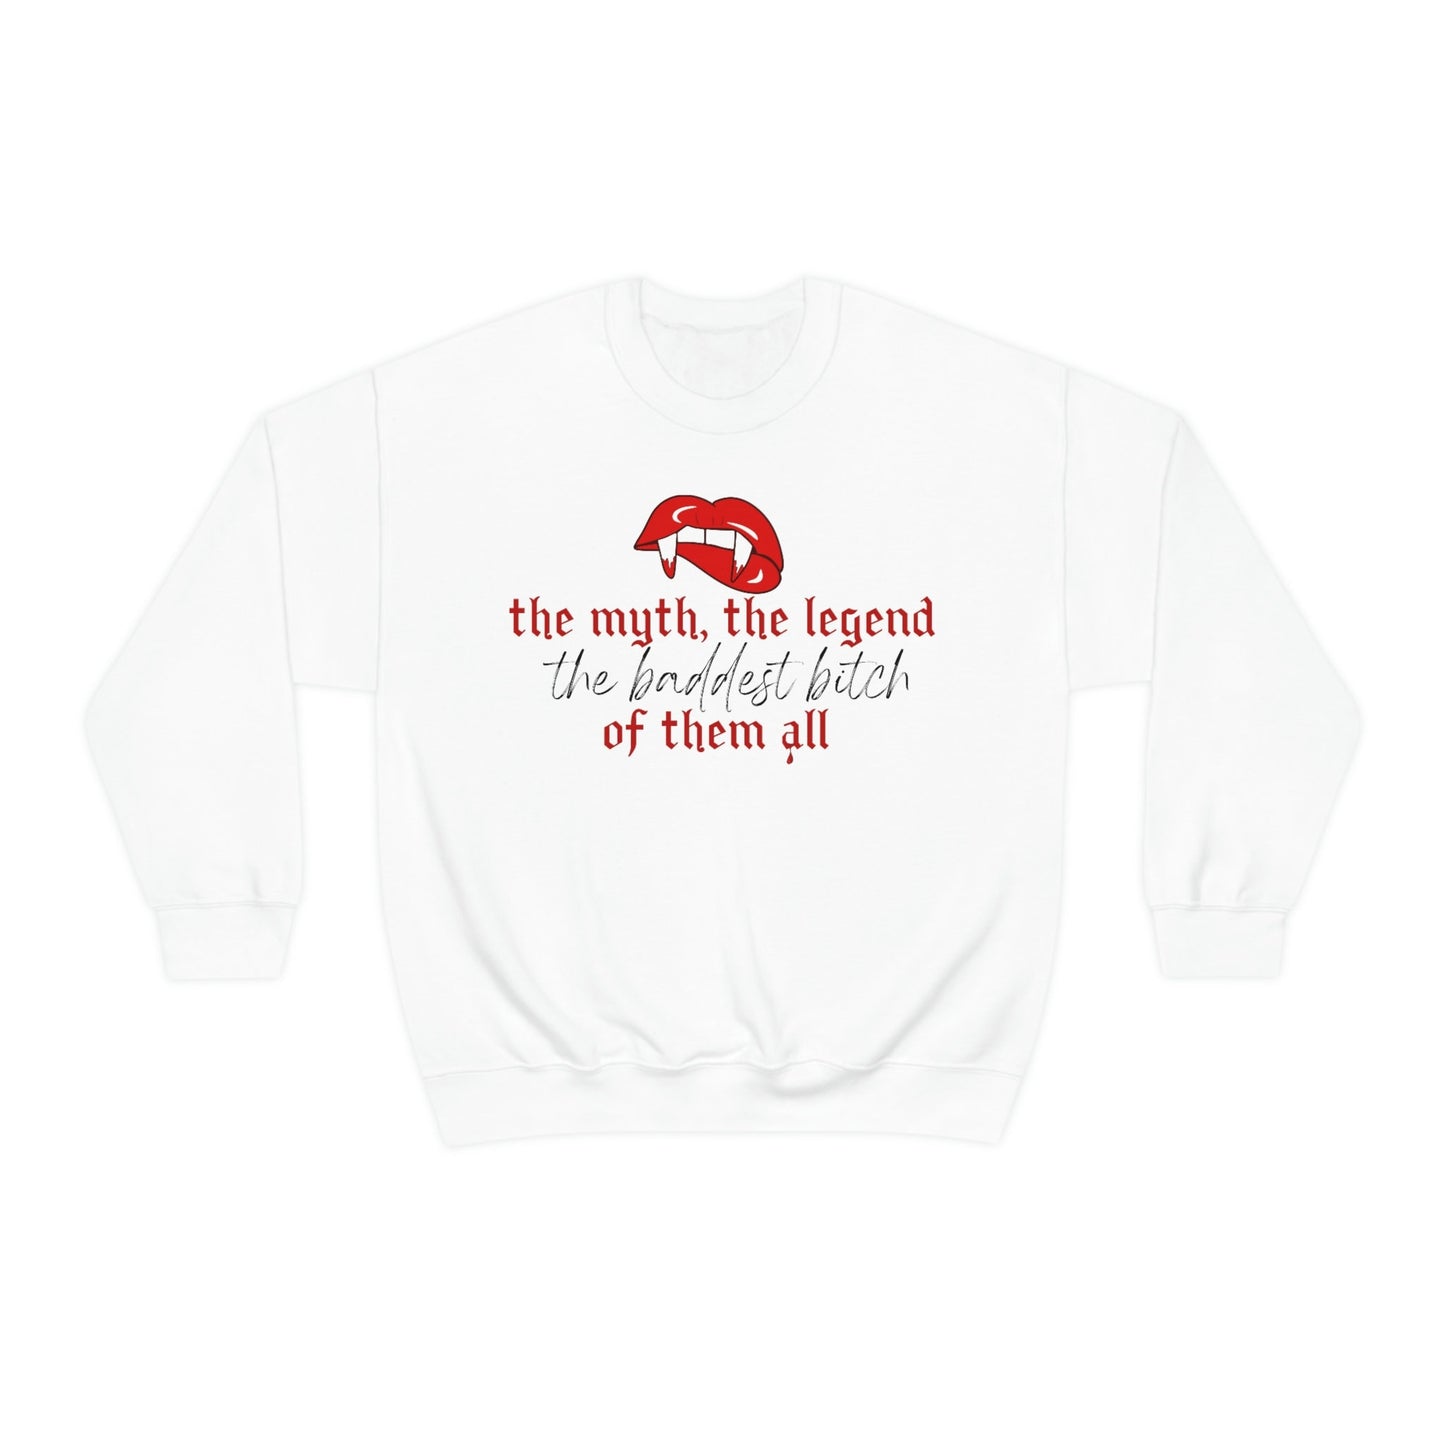 Katherine Pierce Sweatshirt, TVD Sweatshirt, Tvd apparel, TVD merch, Katherine Pierce, The Salvatore brothers, Tvd fan gift